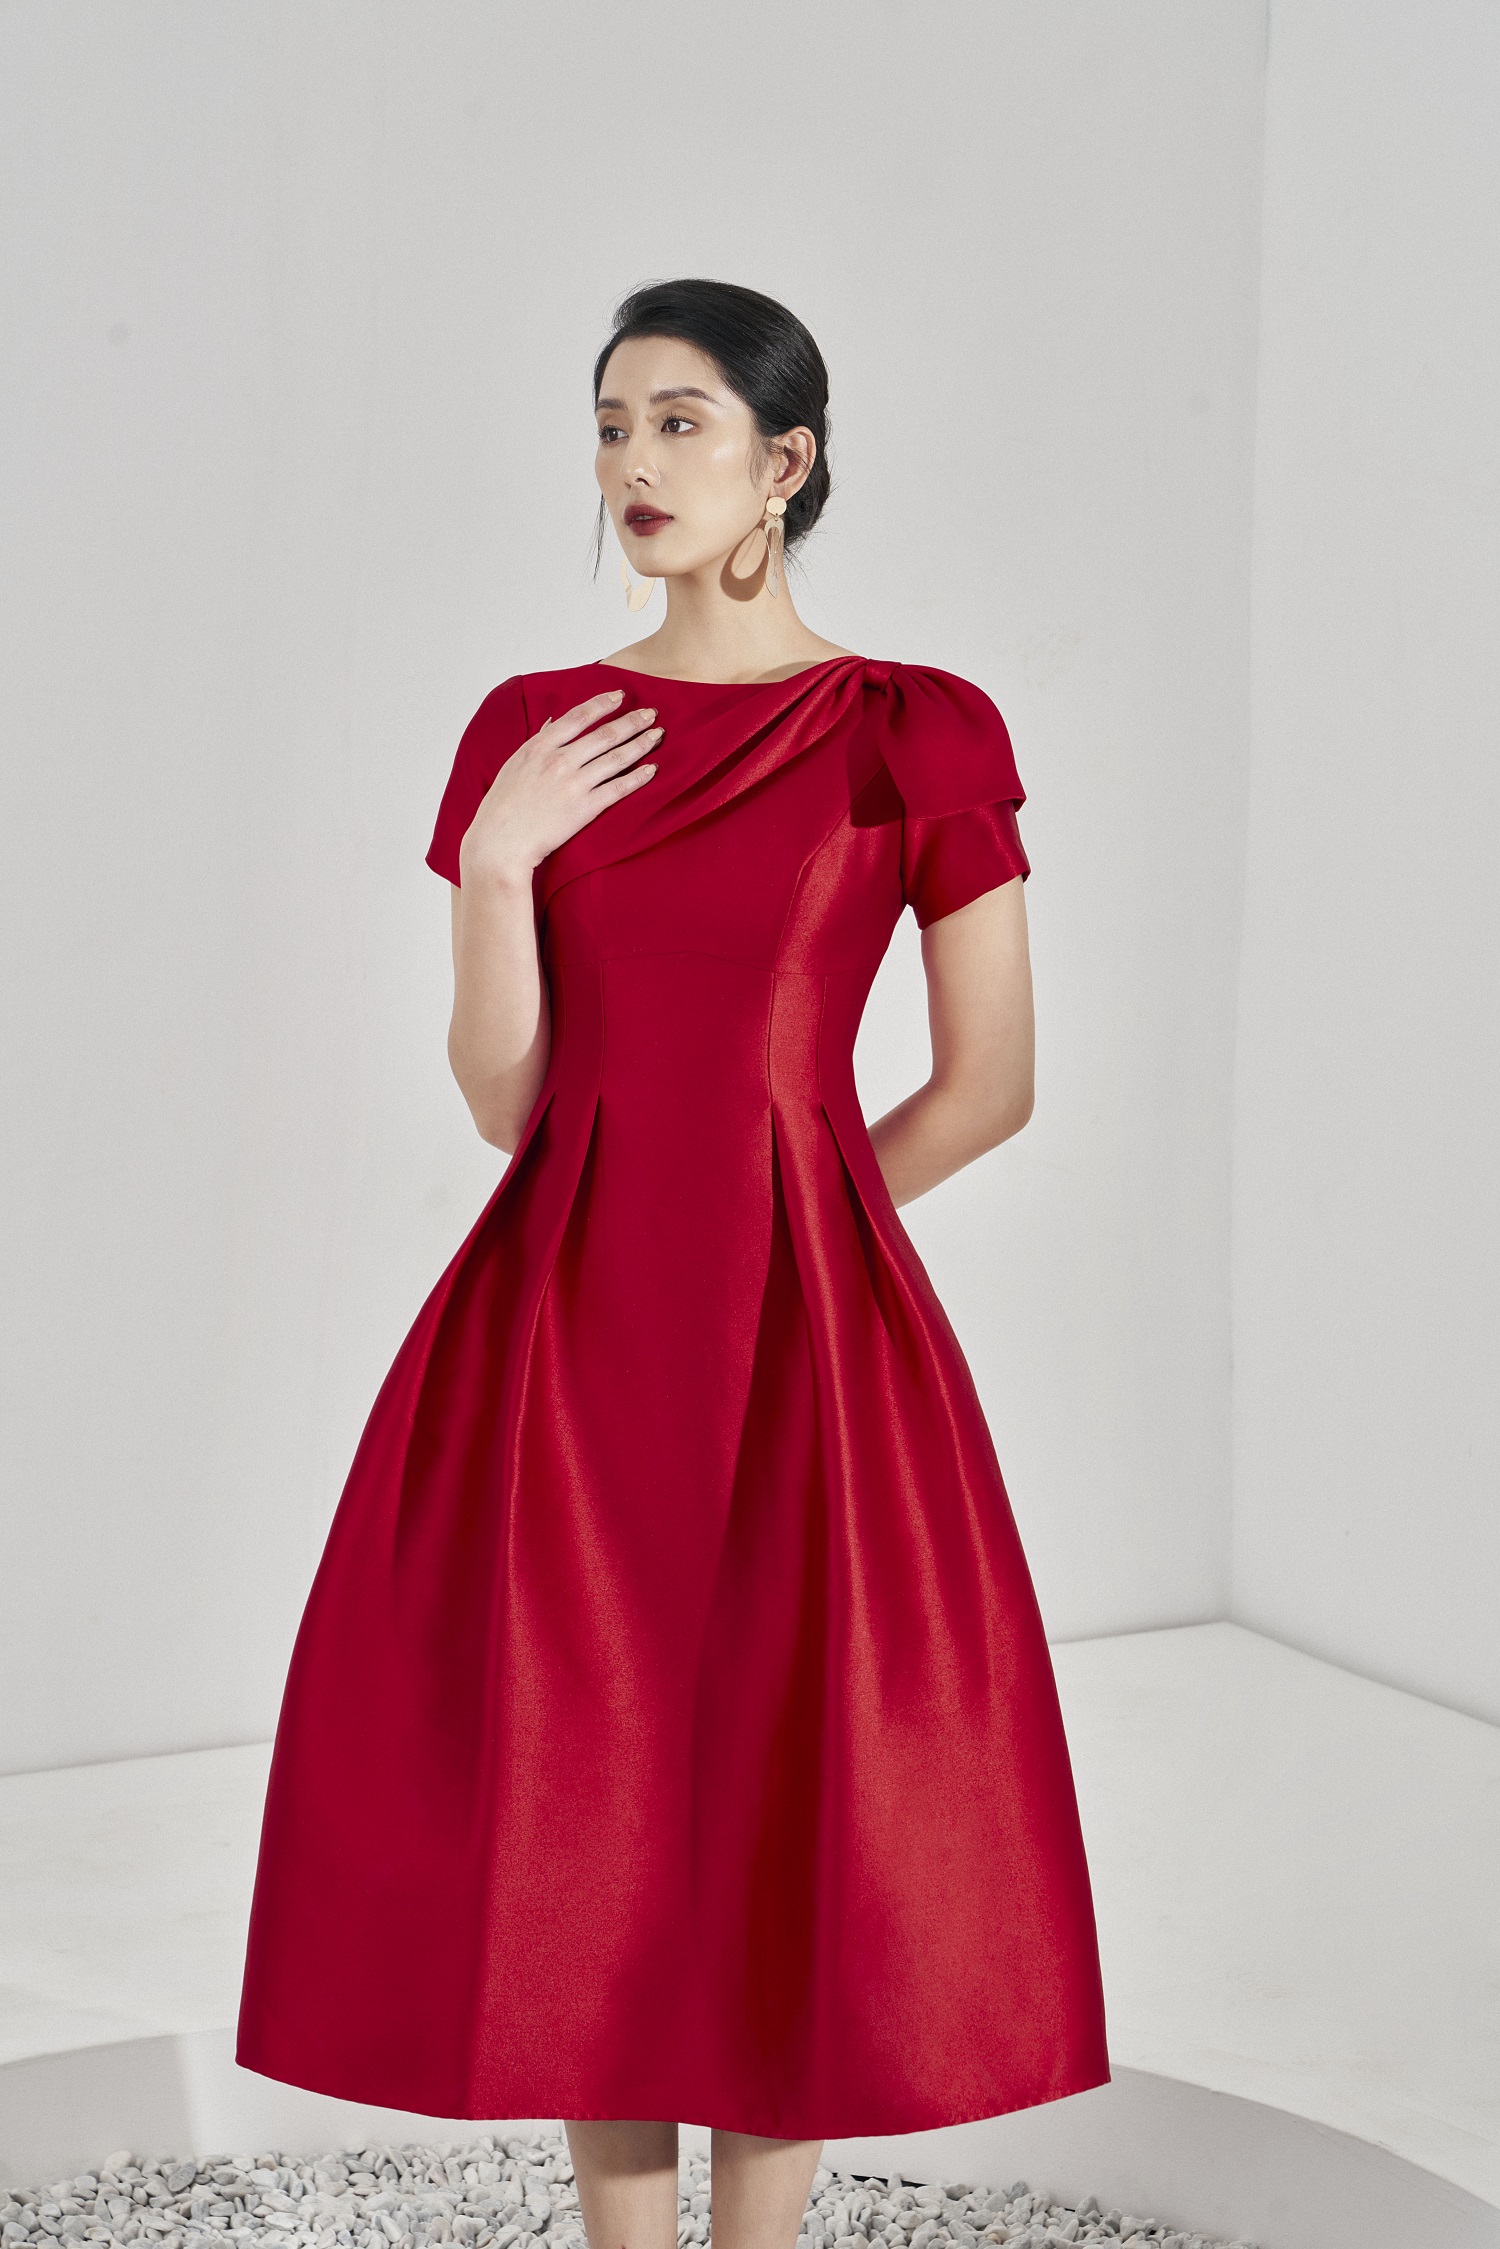 Miiu Shop Online - Váy xòe trễ vai vải tafta ánh kim cao cấp Màu: trắng,  đỏ, nude (da) Size S,M | Facebook